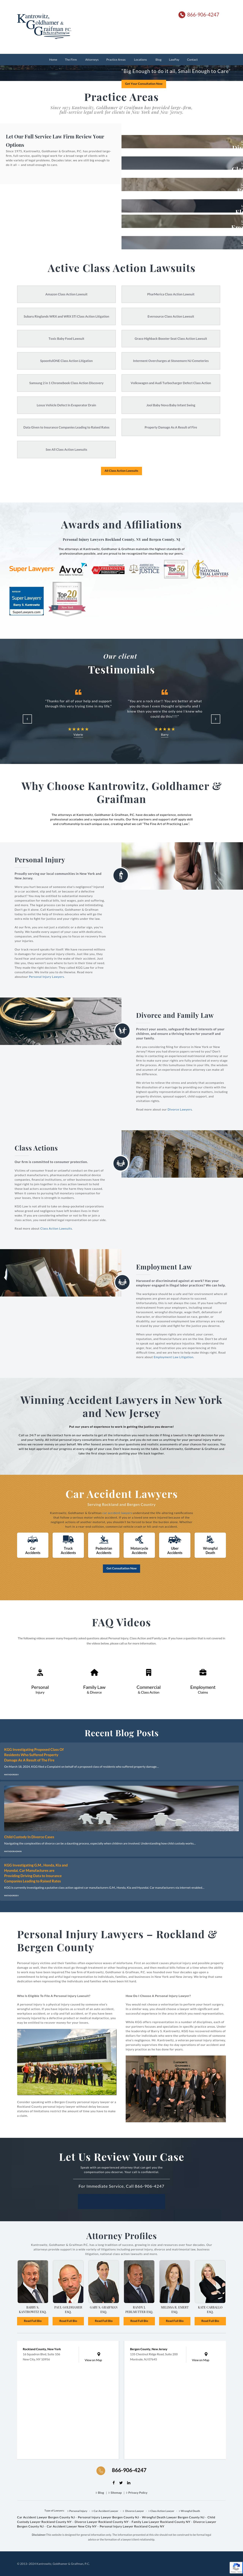 Kantrowitz, Goldhamer & Graifman, P.C. - Montvale NJ Lawyers